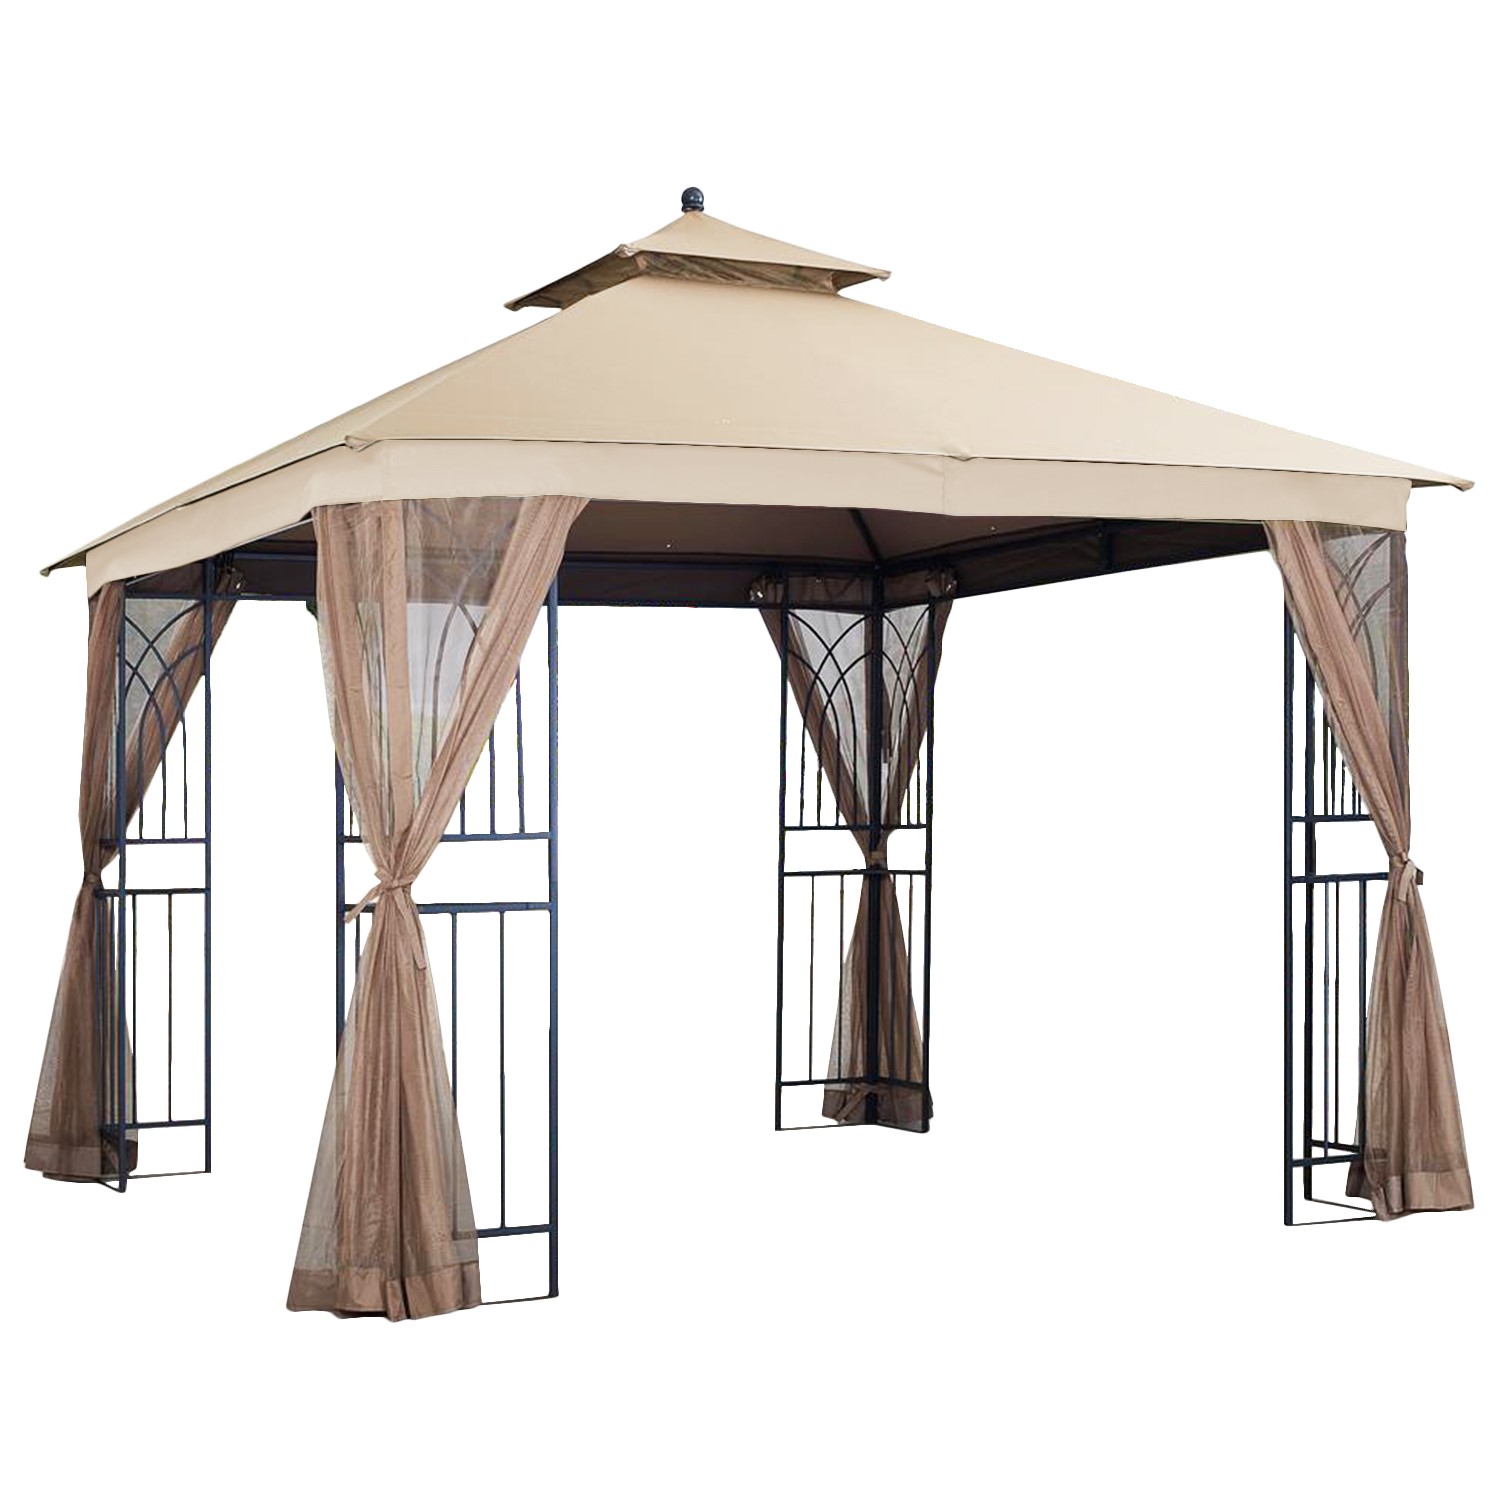 Replacement Canopy for Harmony Gazebo - Riplock 350 Garden Winds CANADA